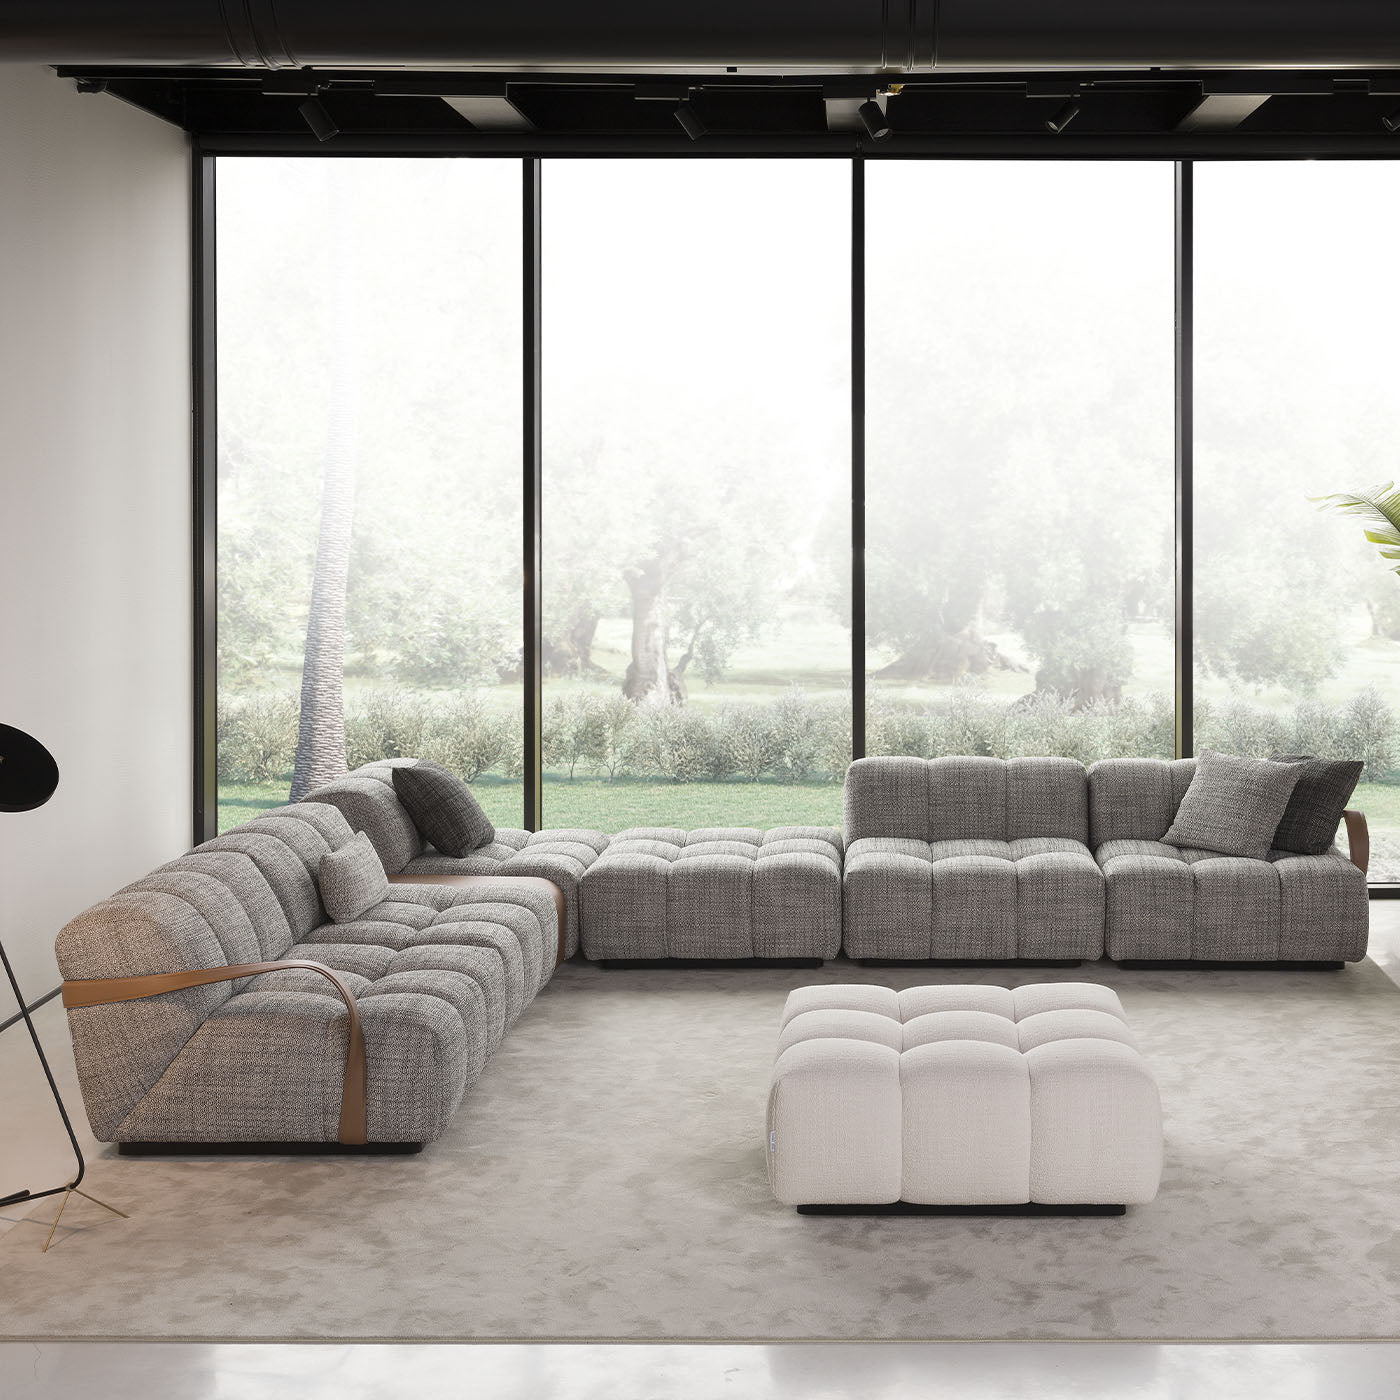 Venice Modular Sofa by Palomba Serafini - Alternative view 2